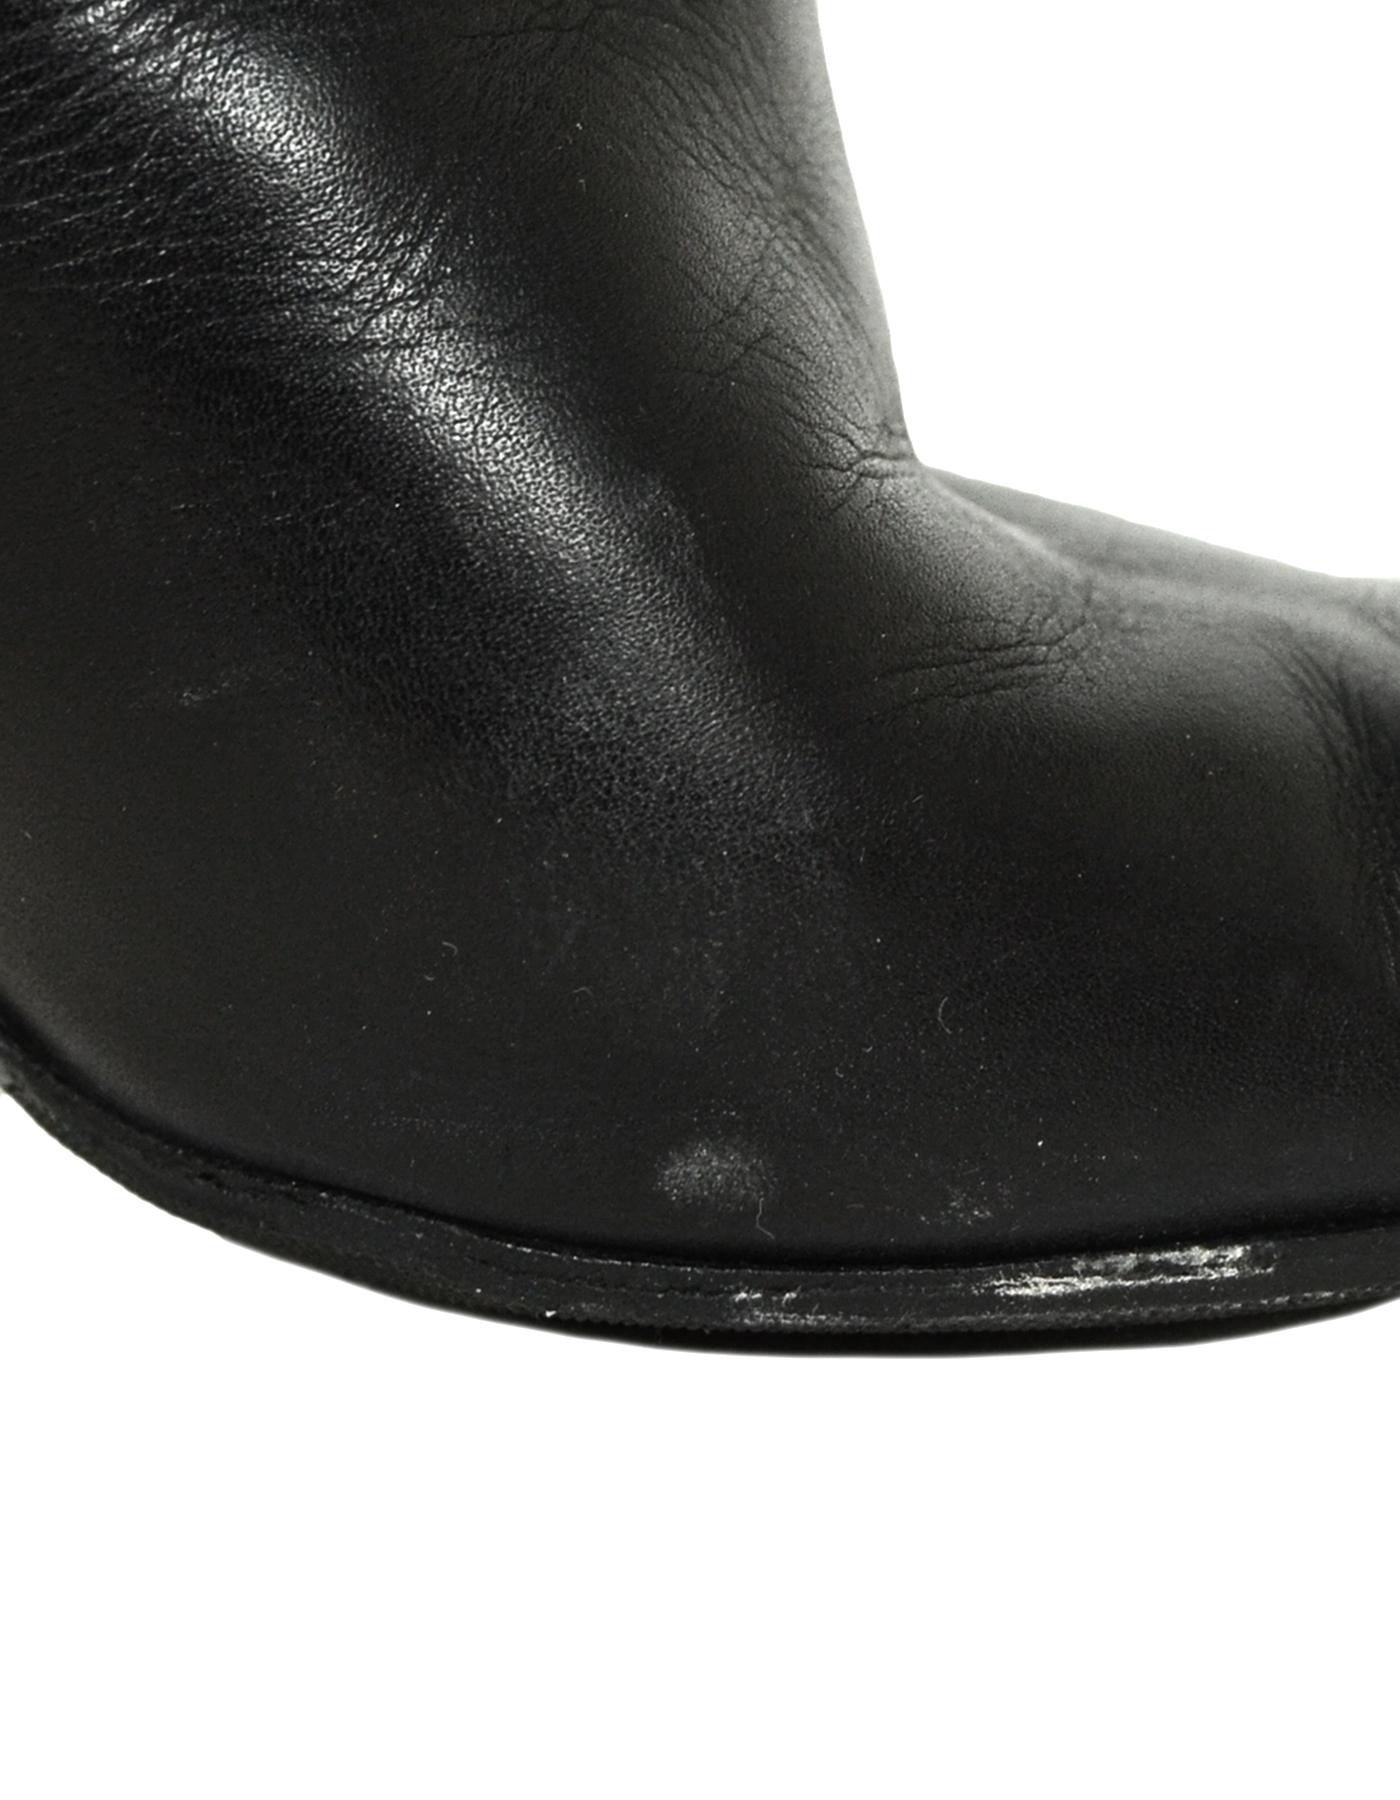 Jimmy Choo Black Leather Heeled Knee-High Boots with Gold Trim Heel sz 36.5 2